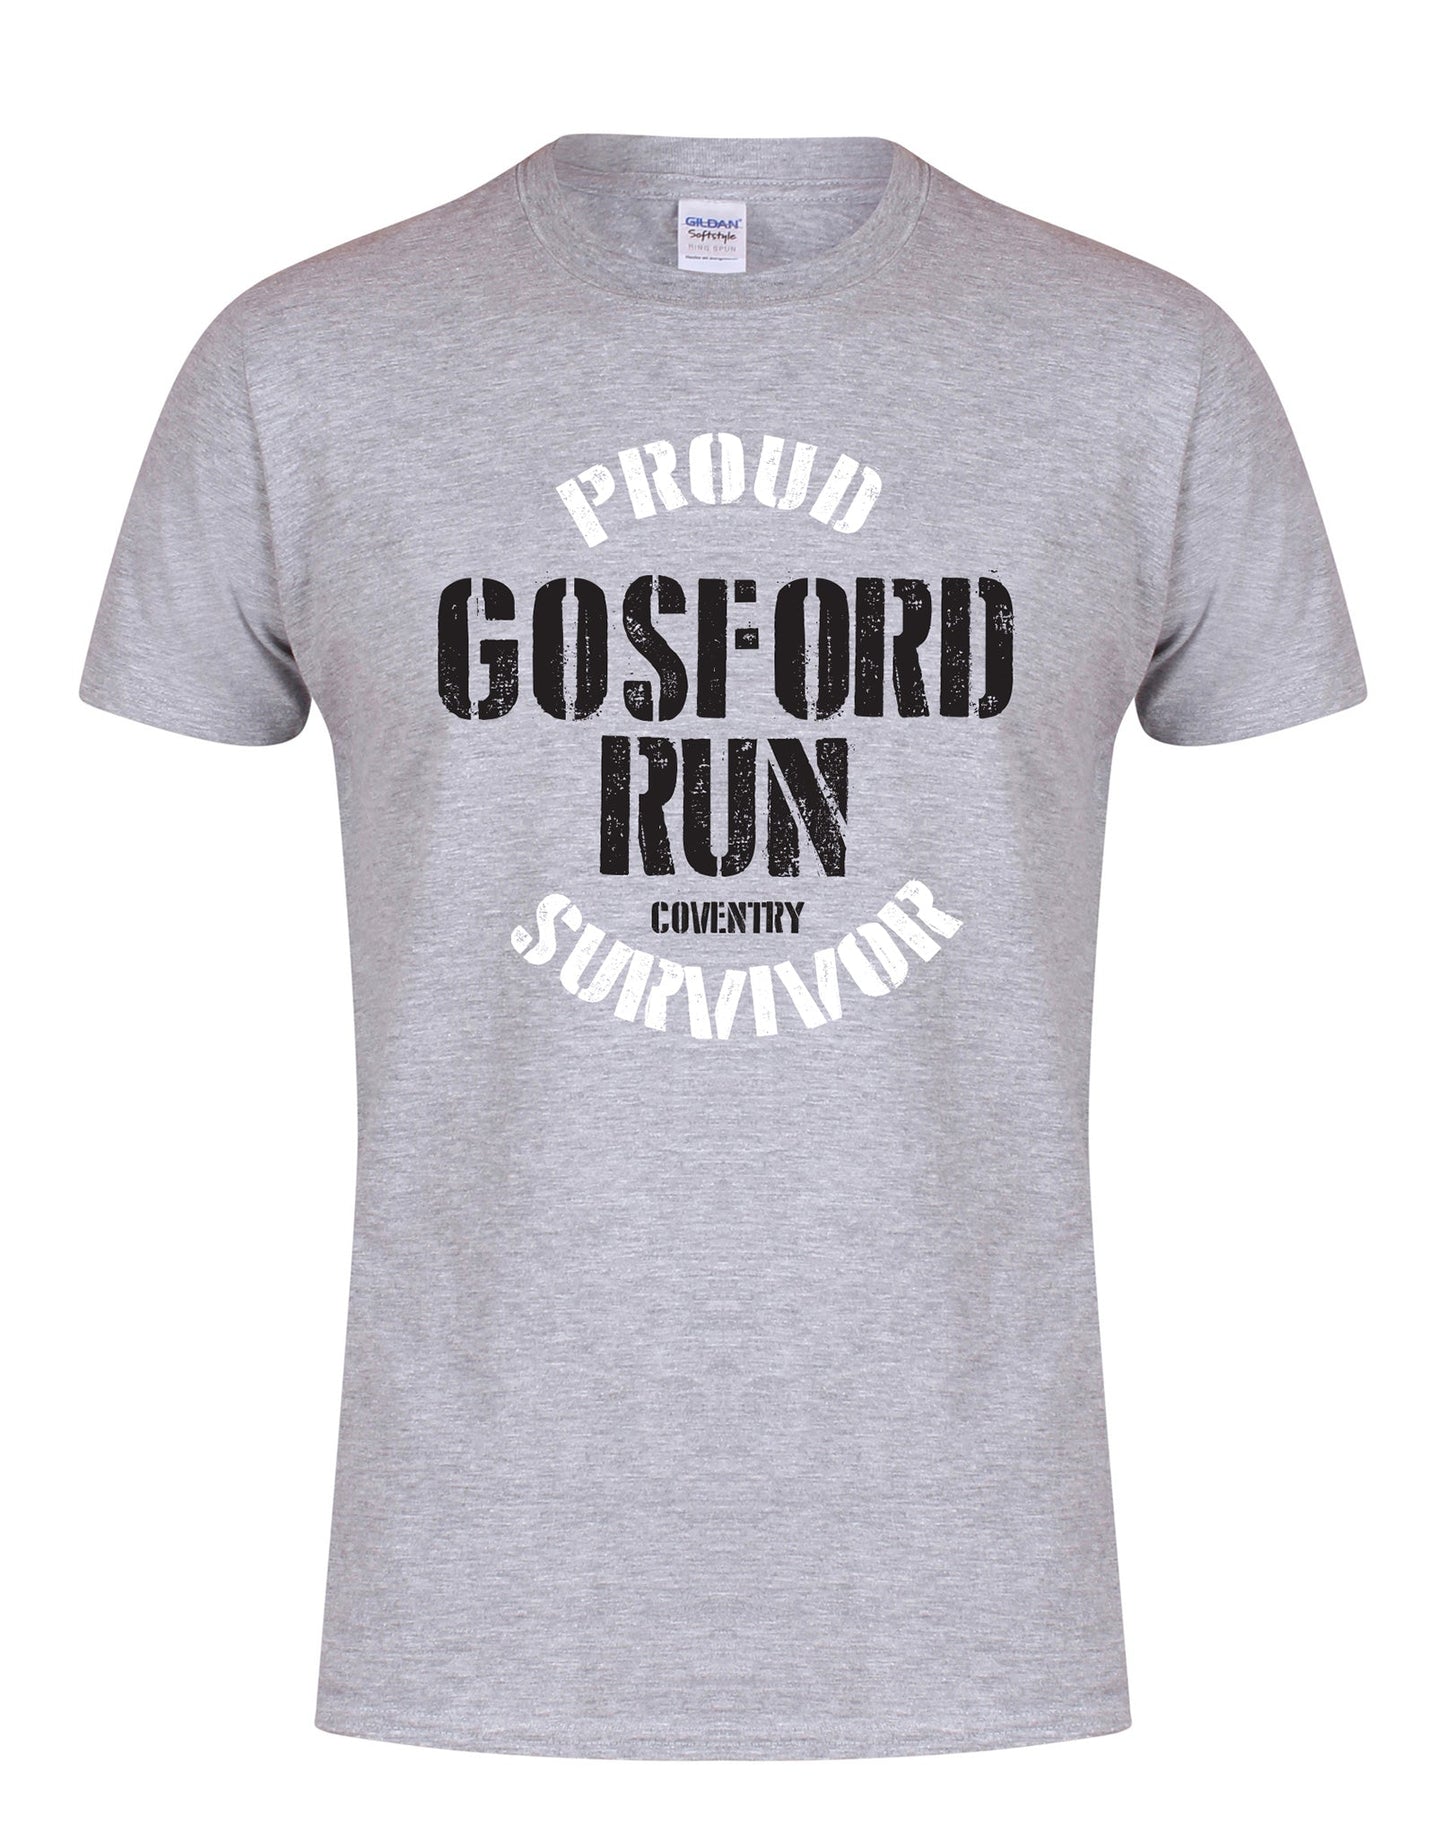 Proud Gosford Run Survivor unisex fit T-shirt - various colours - Dirty Stop Outs